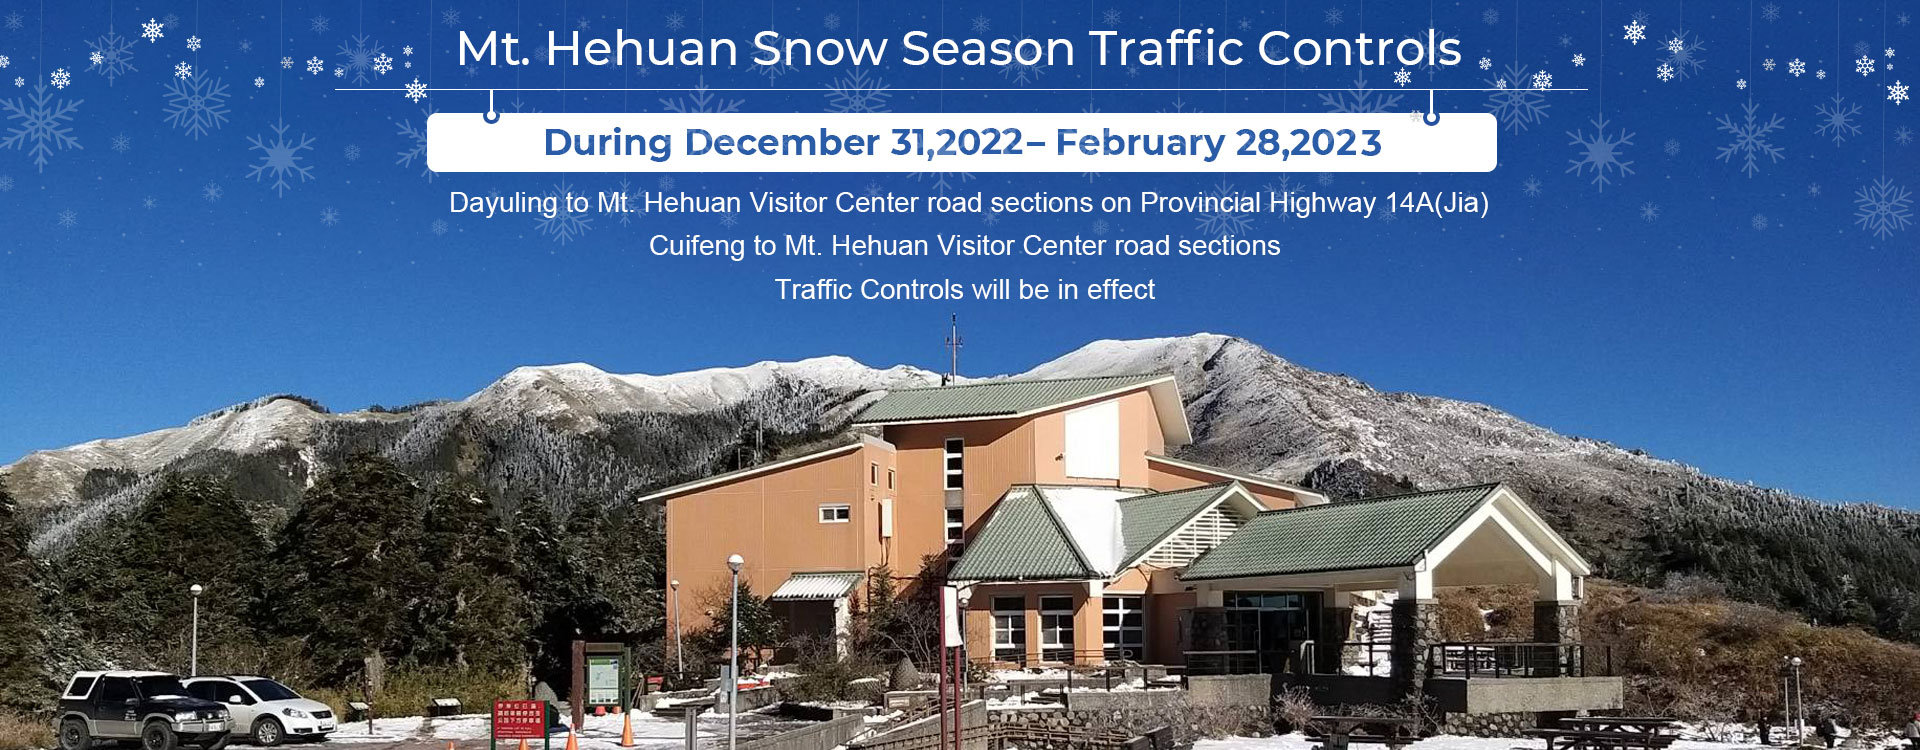 Mt. Hehuan Snow Season Traffic Control Info